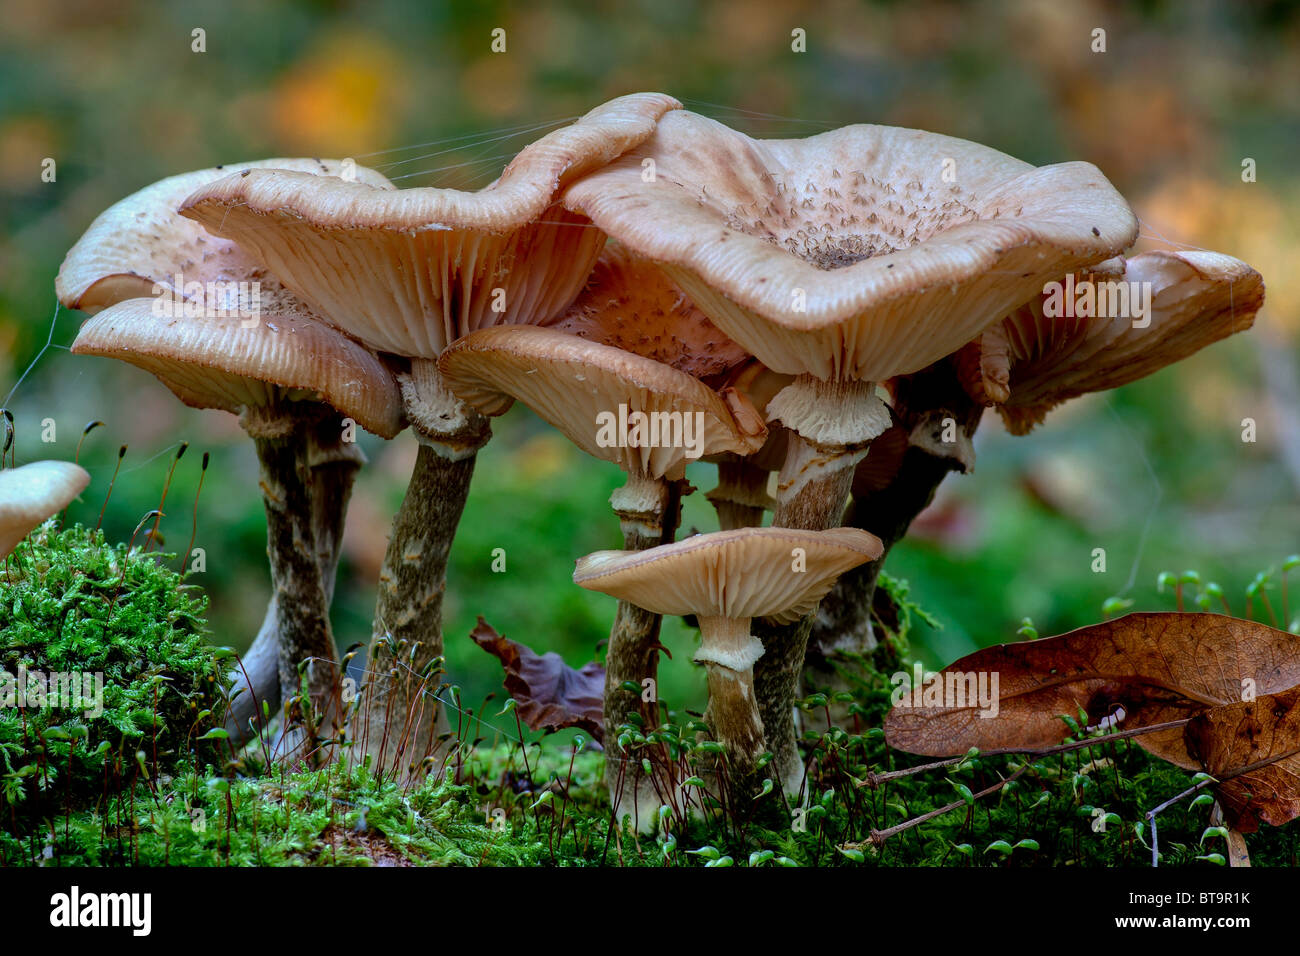 macro fungi image Stock Photo